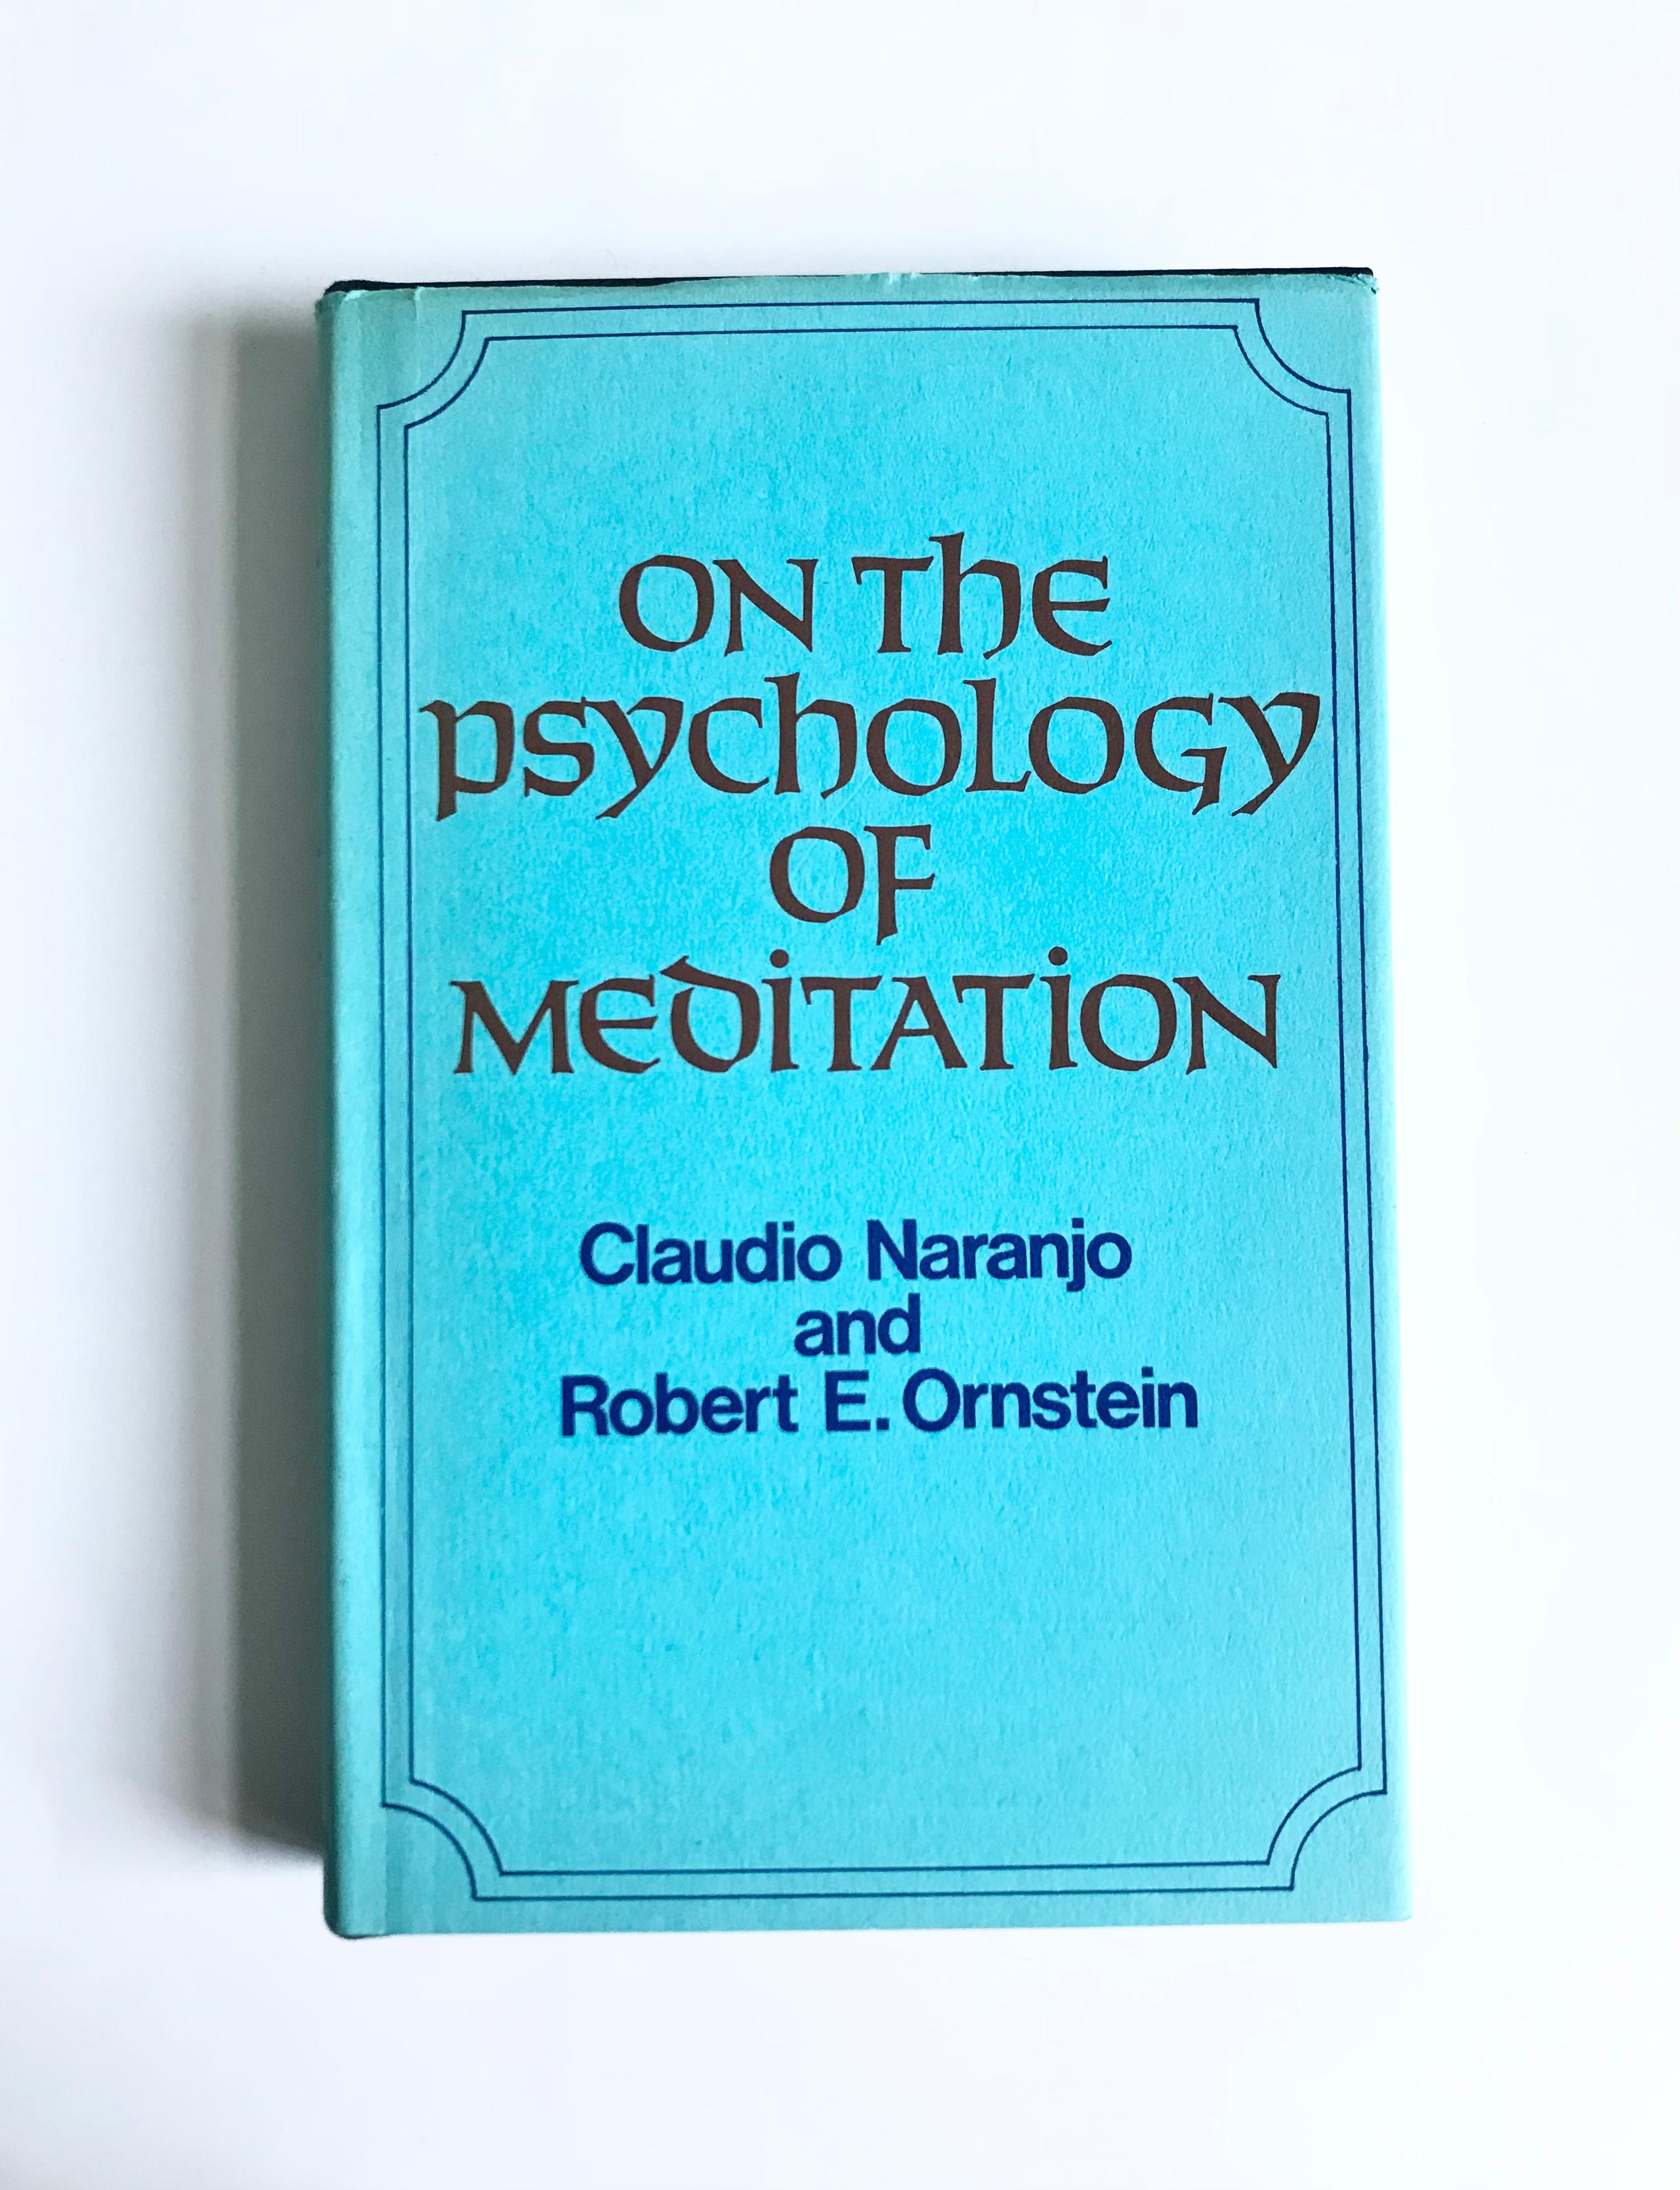 On The Psychology of Meditation by Claudio Naranjo & Robert E. Ornstein